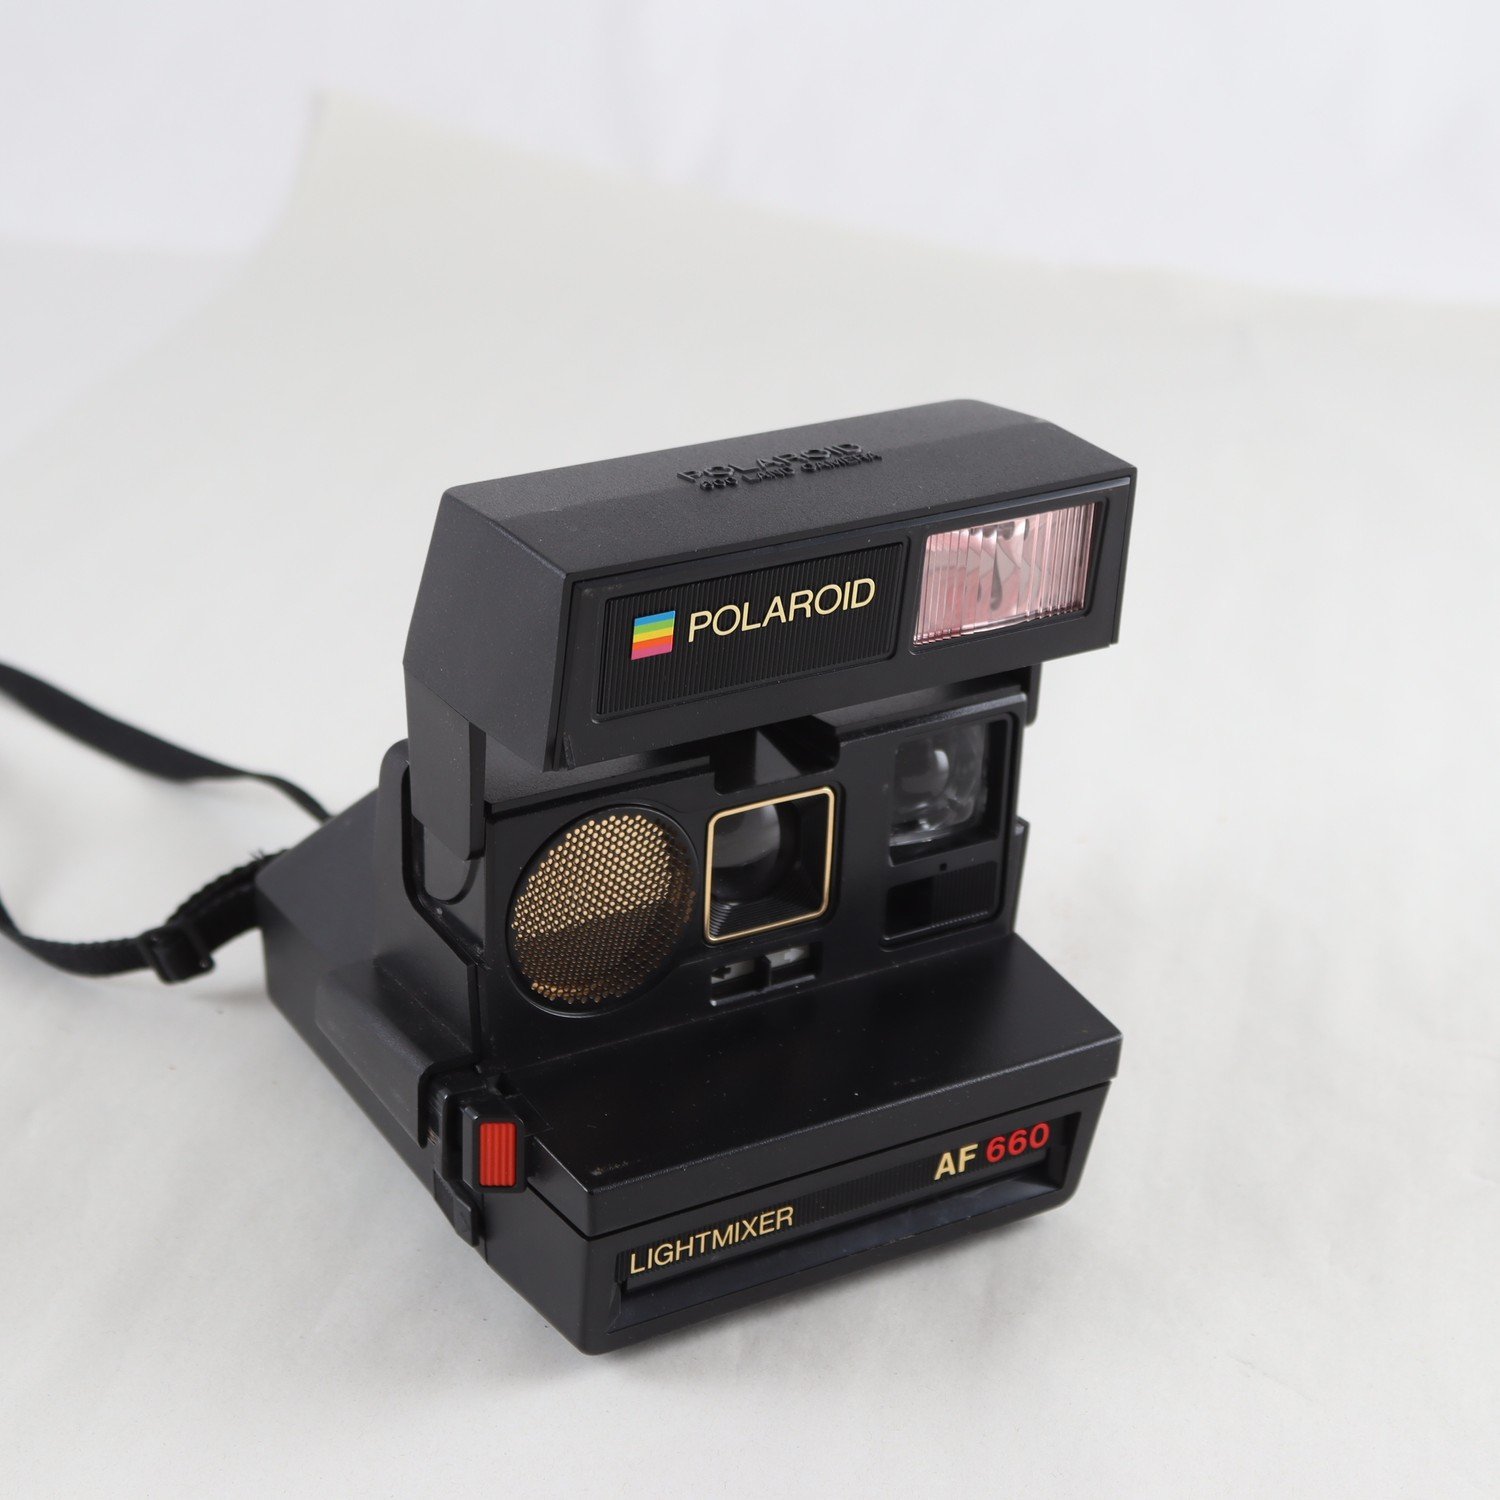 Kamera, Polaroid AF 660, lightmixer.